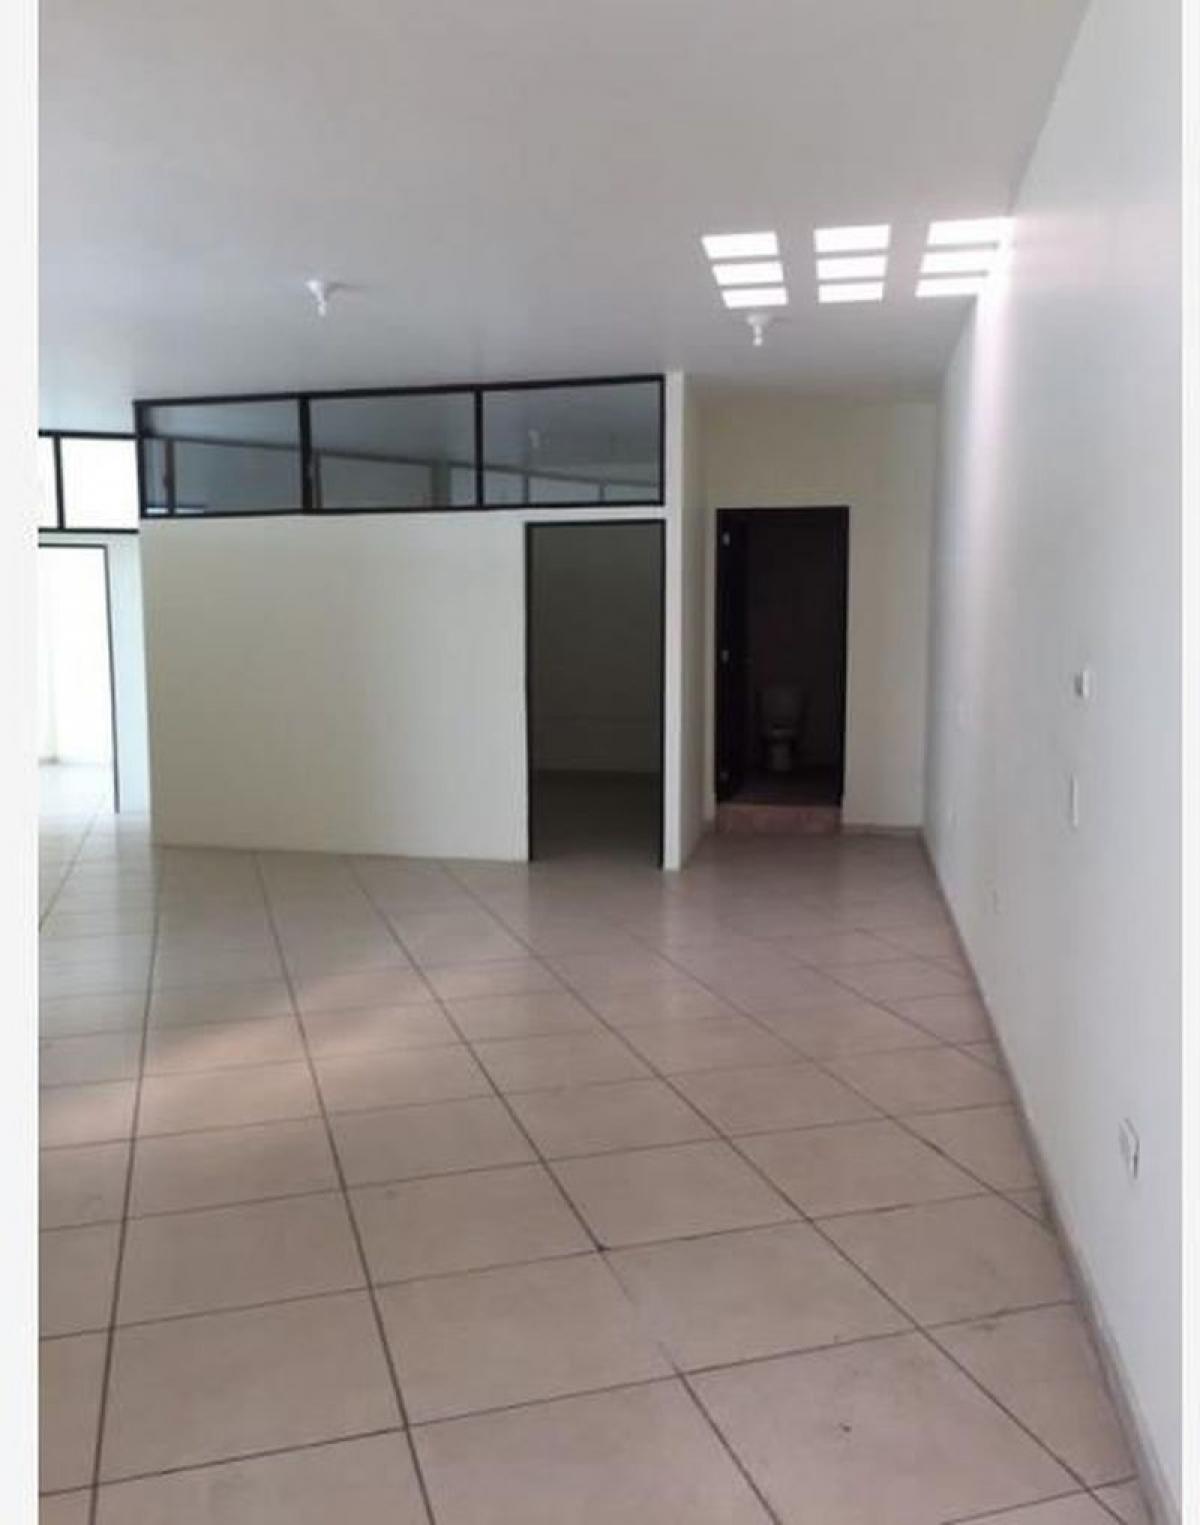 Picture of Apartment Building For Sale in Aguascalientes, Aguascalientes, Mexico